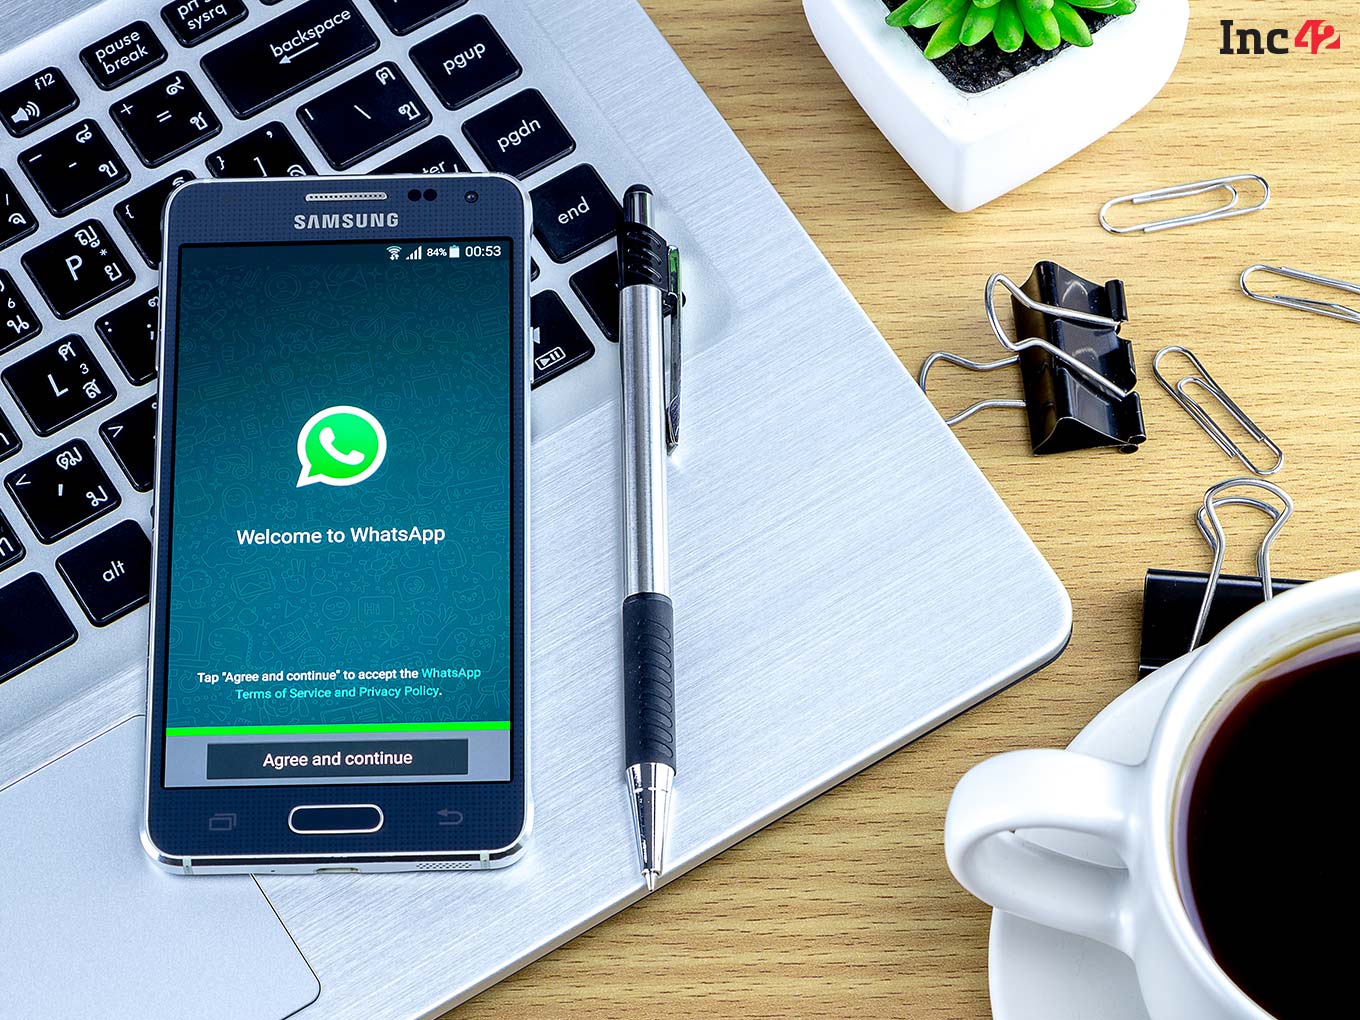 WhatsApp CEO Chris Daniel To Visit India This Week